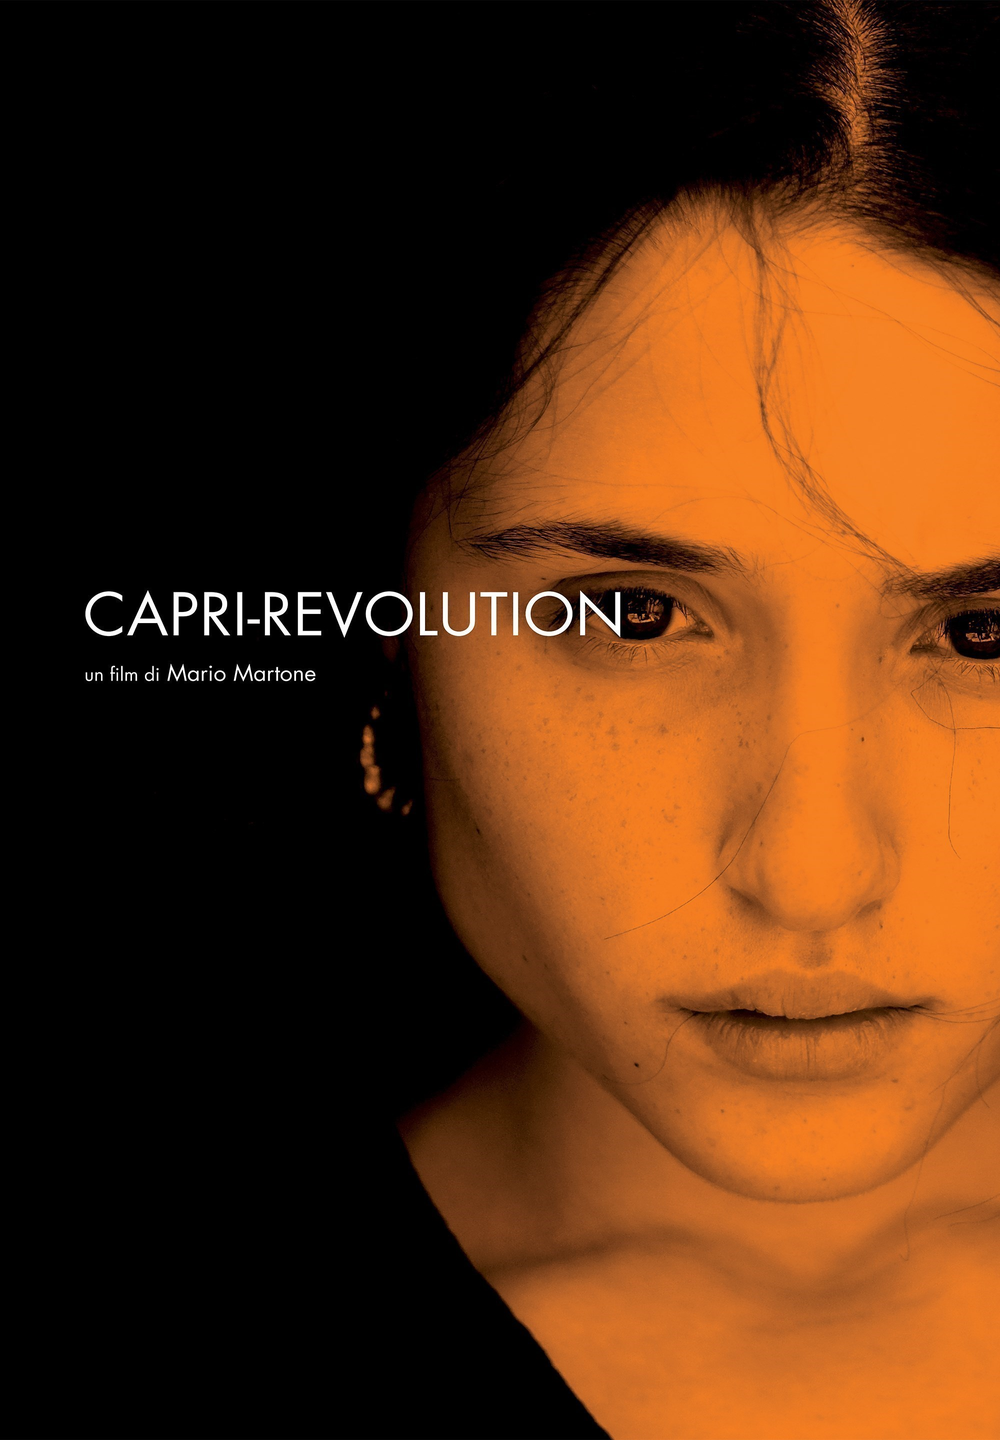 Capri-Revolution [HD] (2018)